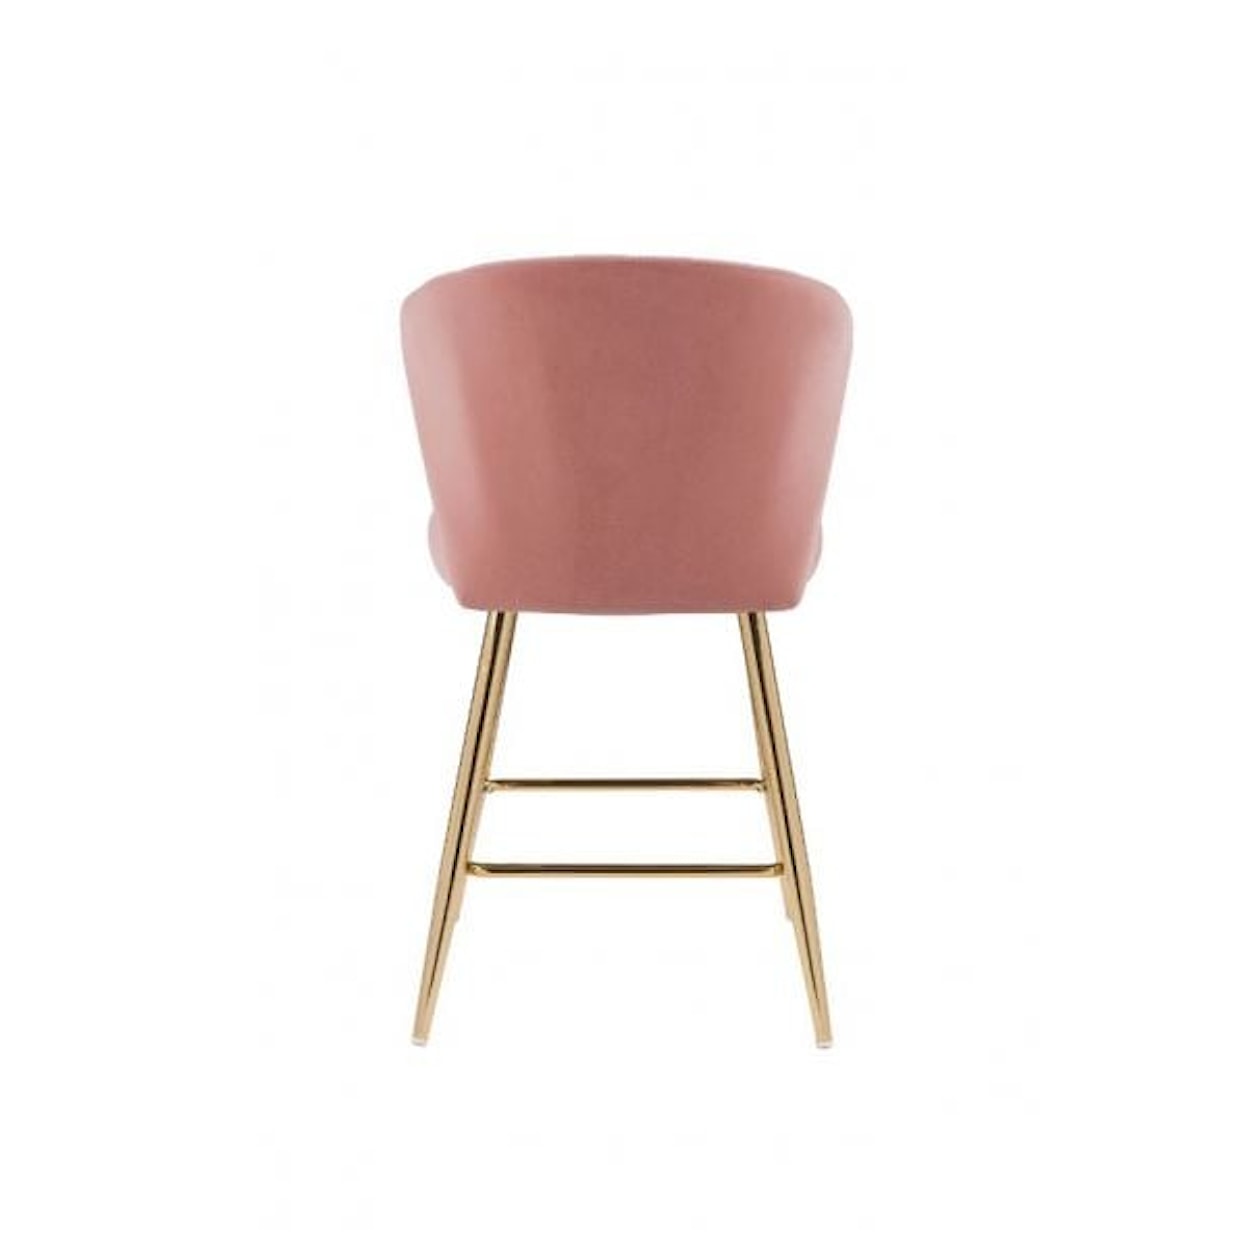 Acme Furniture Rizgek Counter Height Chair